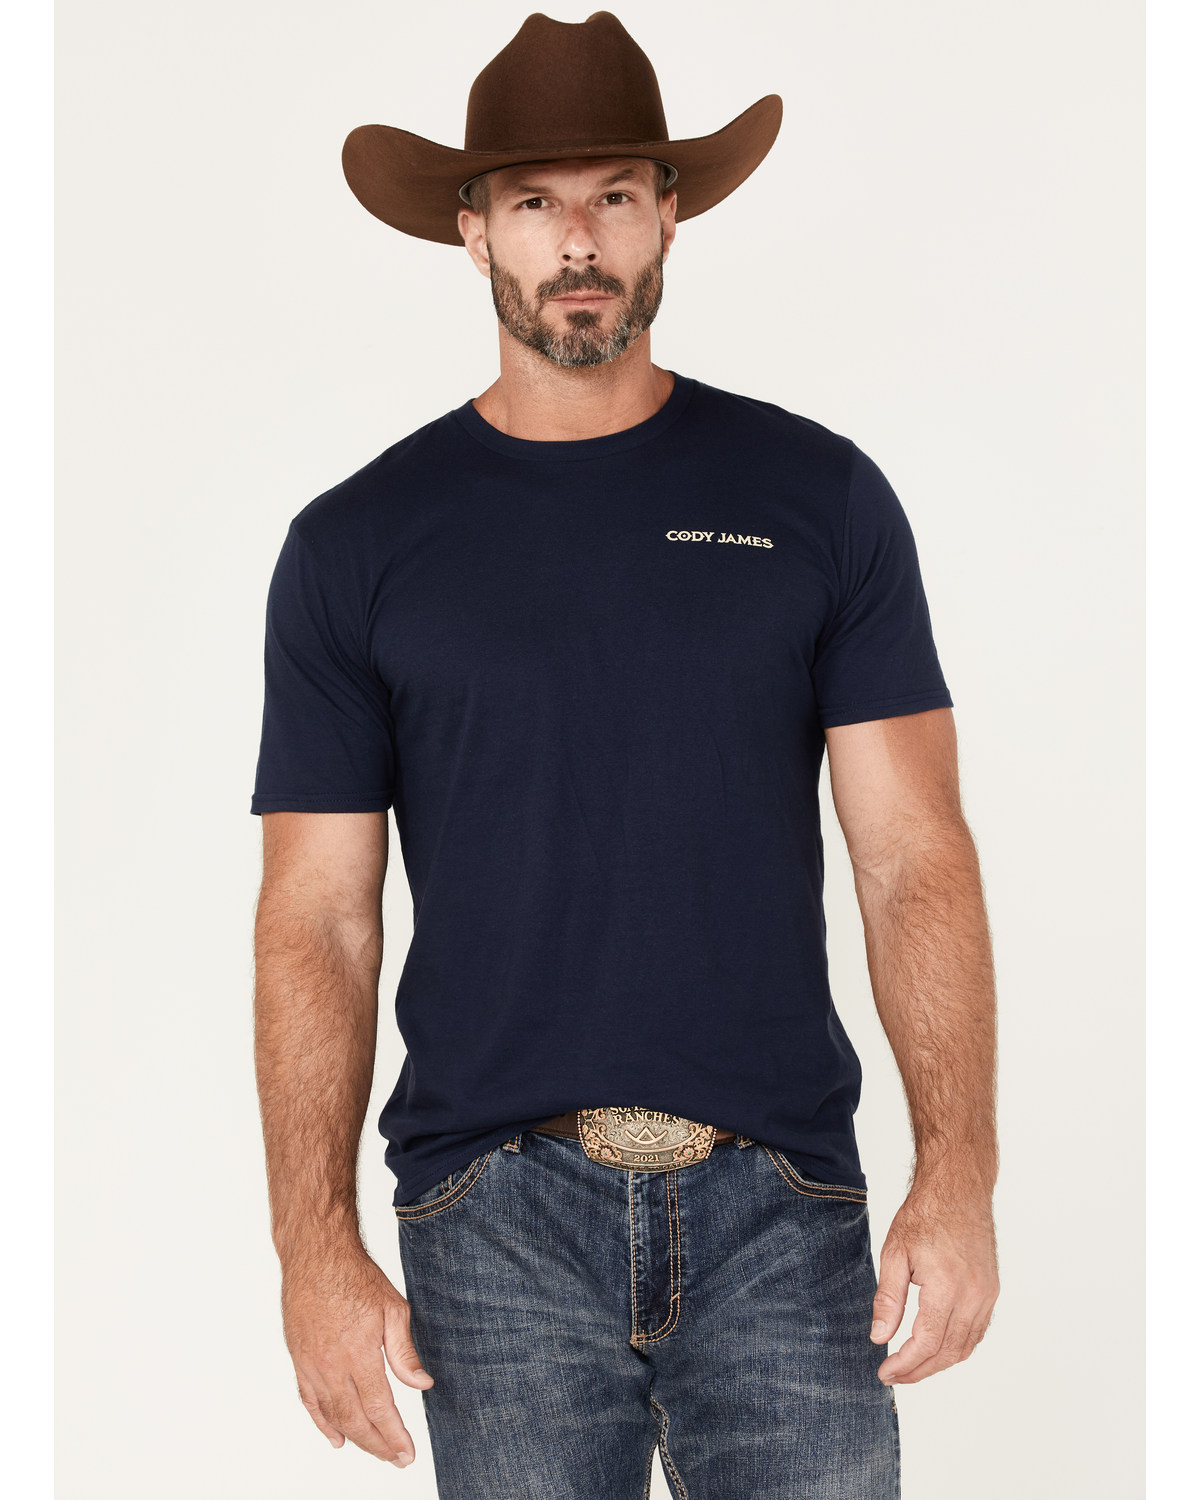 Cody James Men's Ride Or Die Southwestern Graphic Short Sleeve T-Shirt